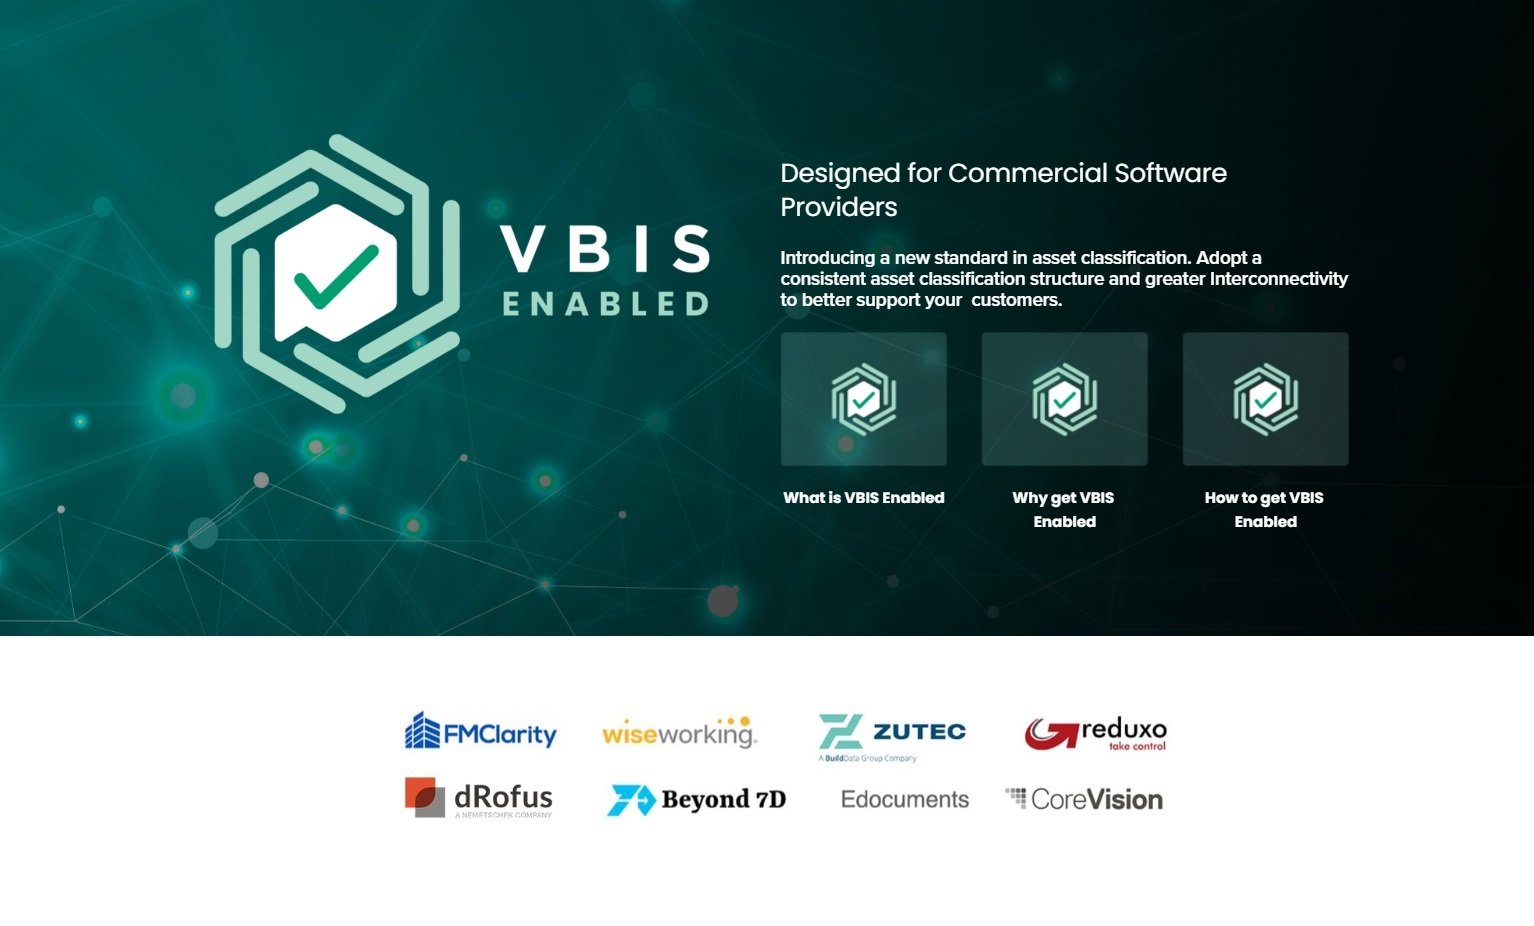 dRofus VBIS Partnership